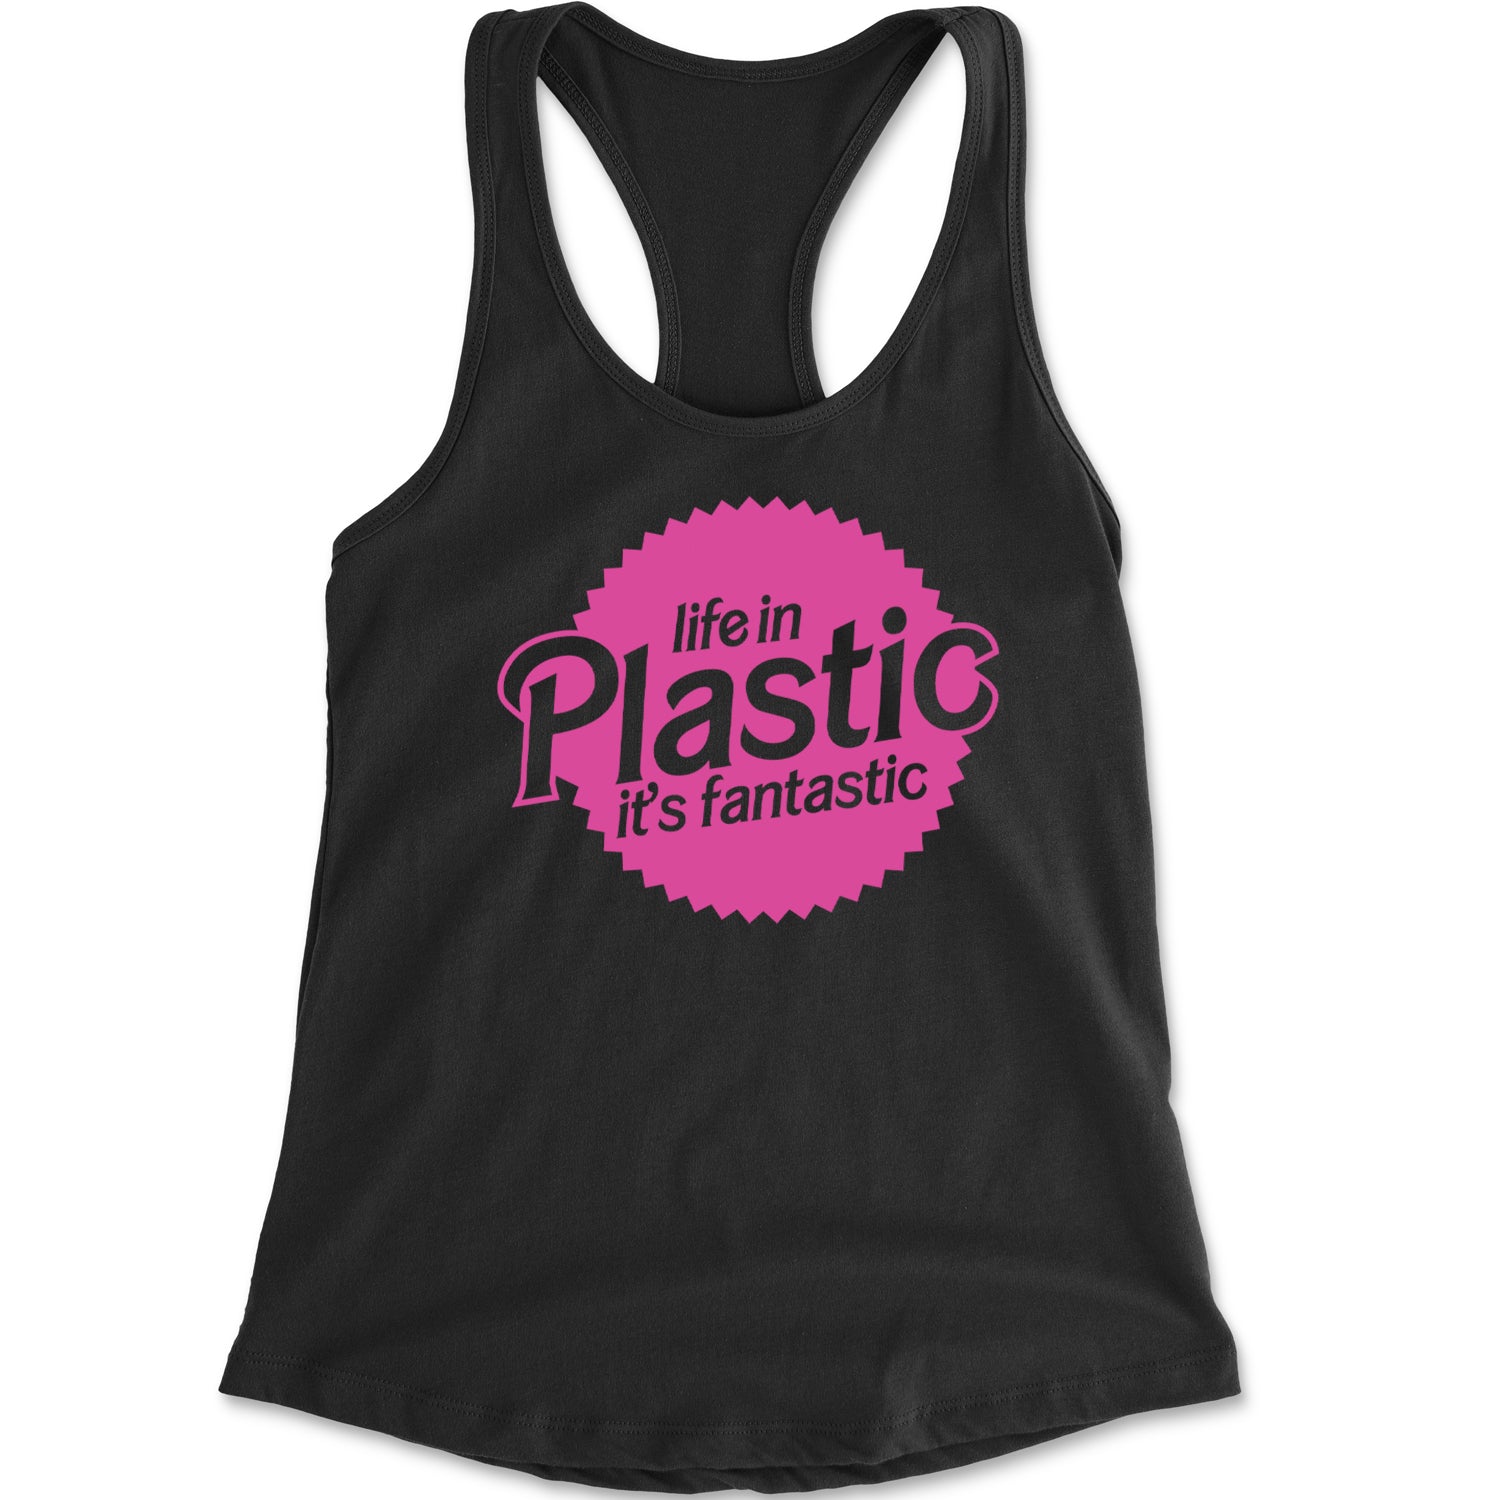 Life In Plastic It's Fantastic Barbenheimer Racerback Tank Top for Women